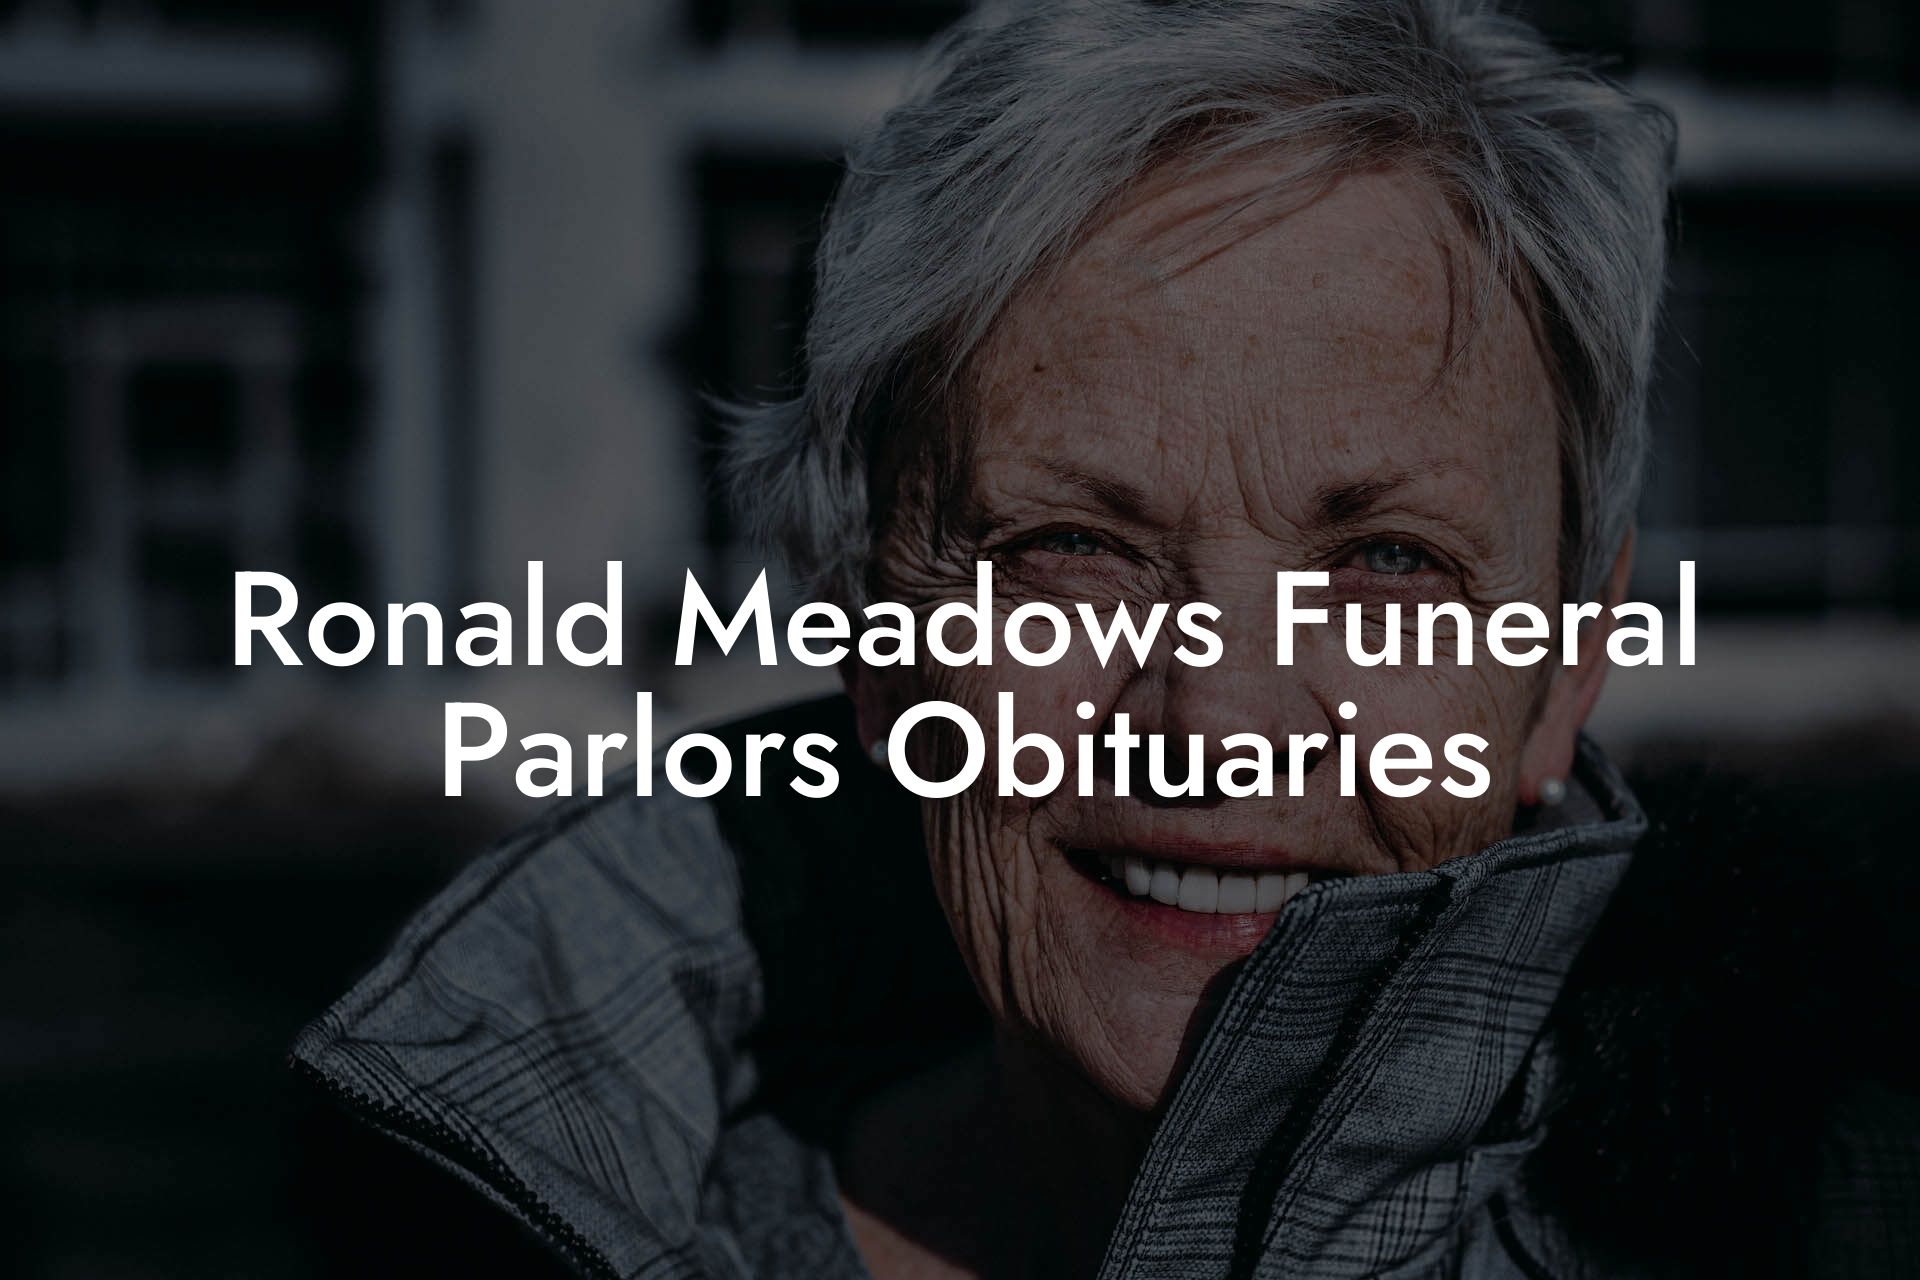 Ronald Meadows Funeral Parlors Obituaries